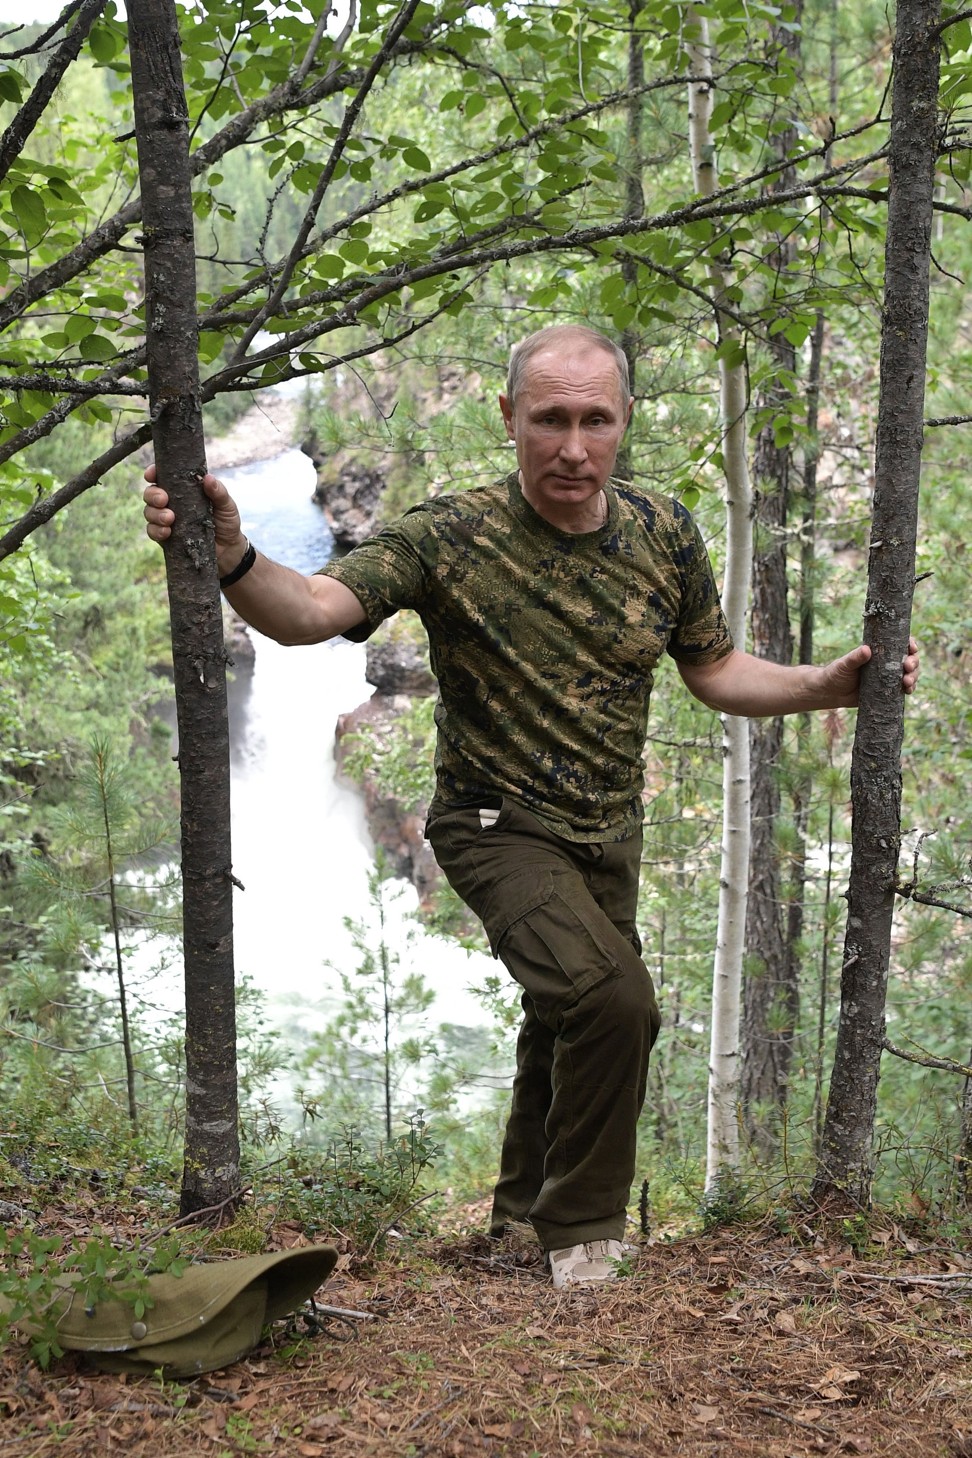 Putin during a walking trip in the mountains. Photo: EPA